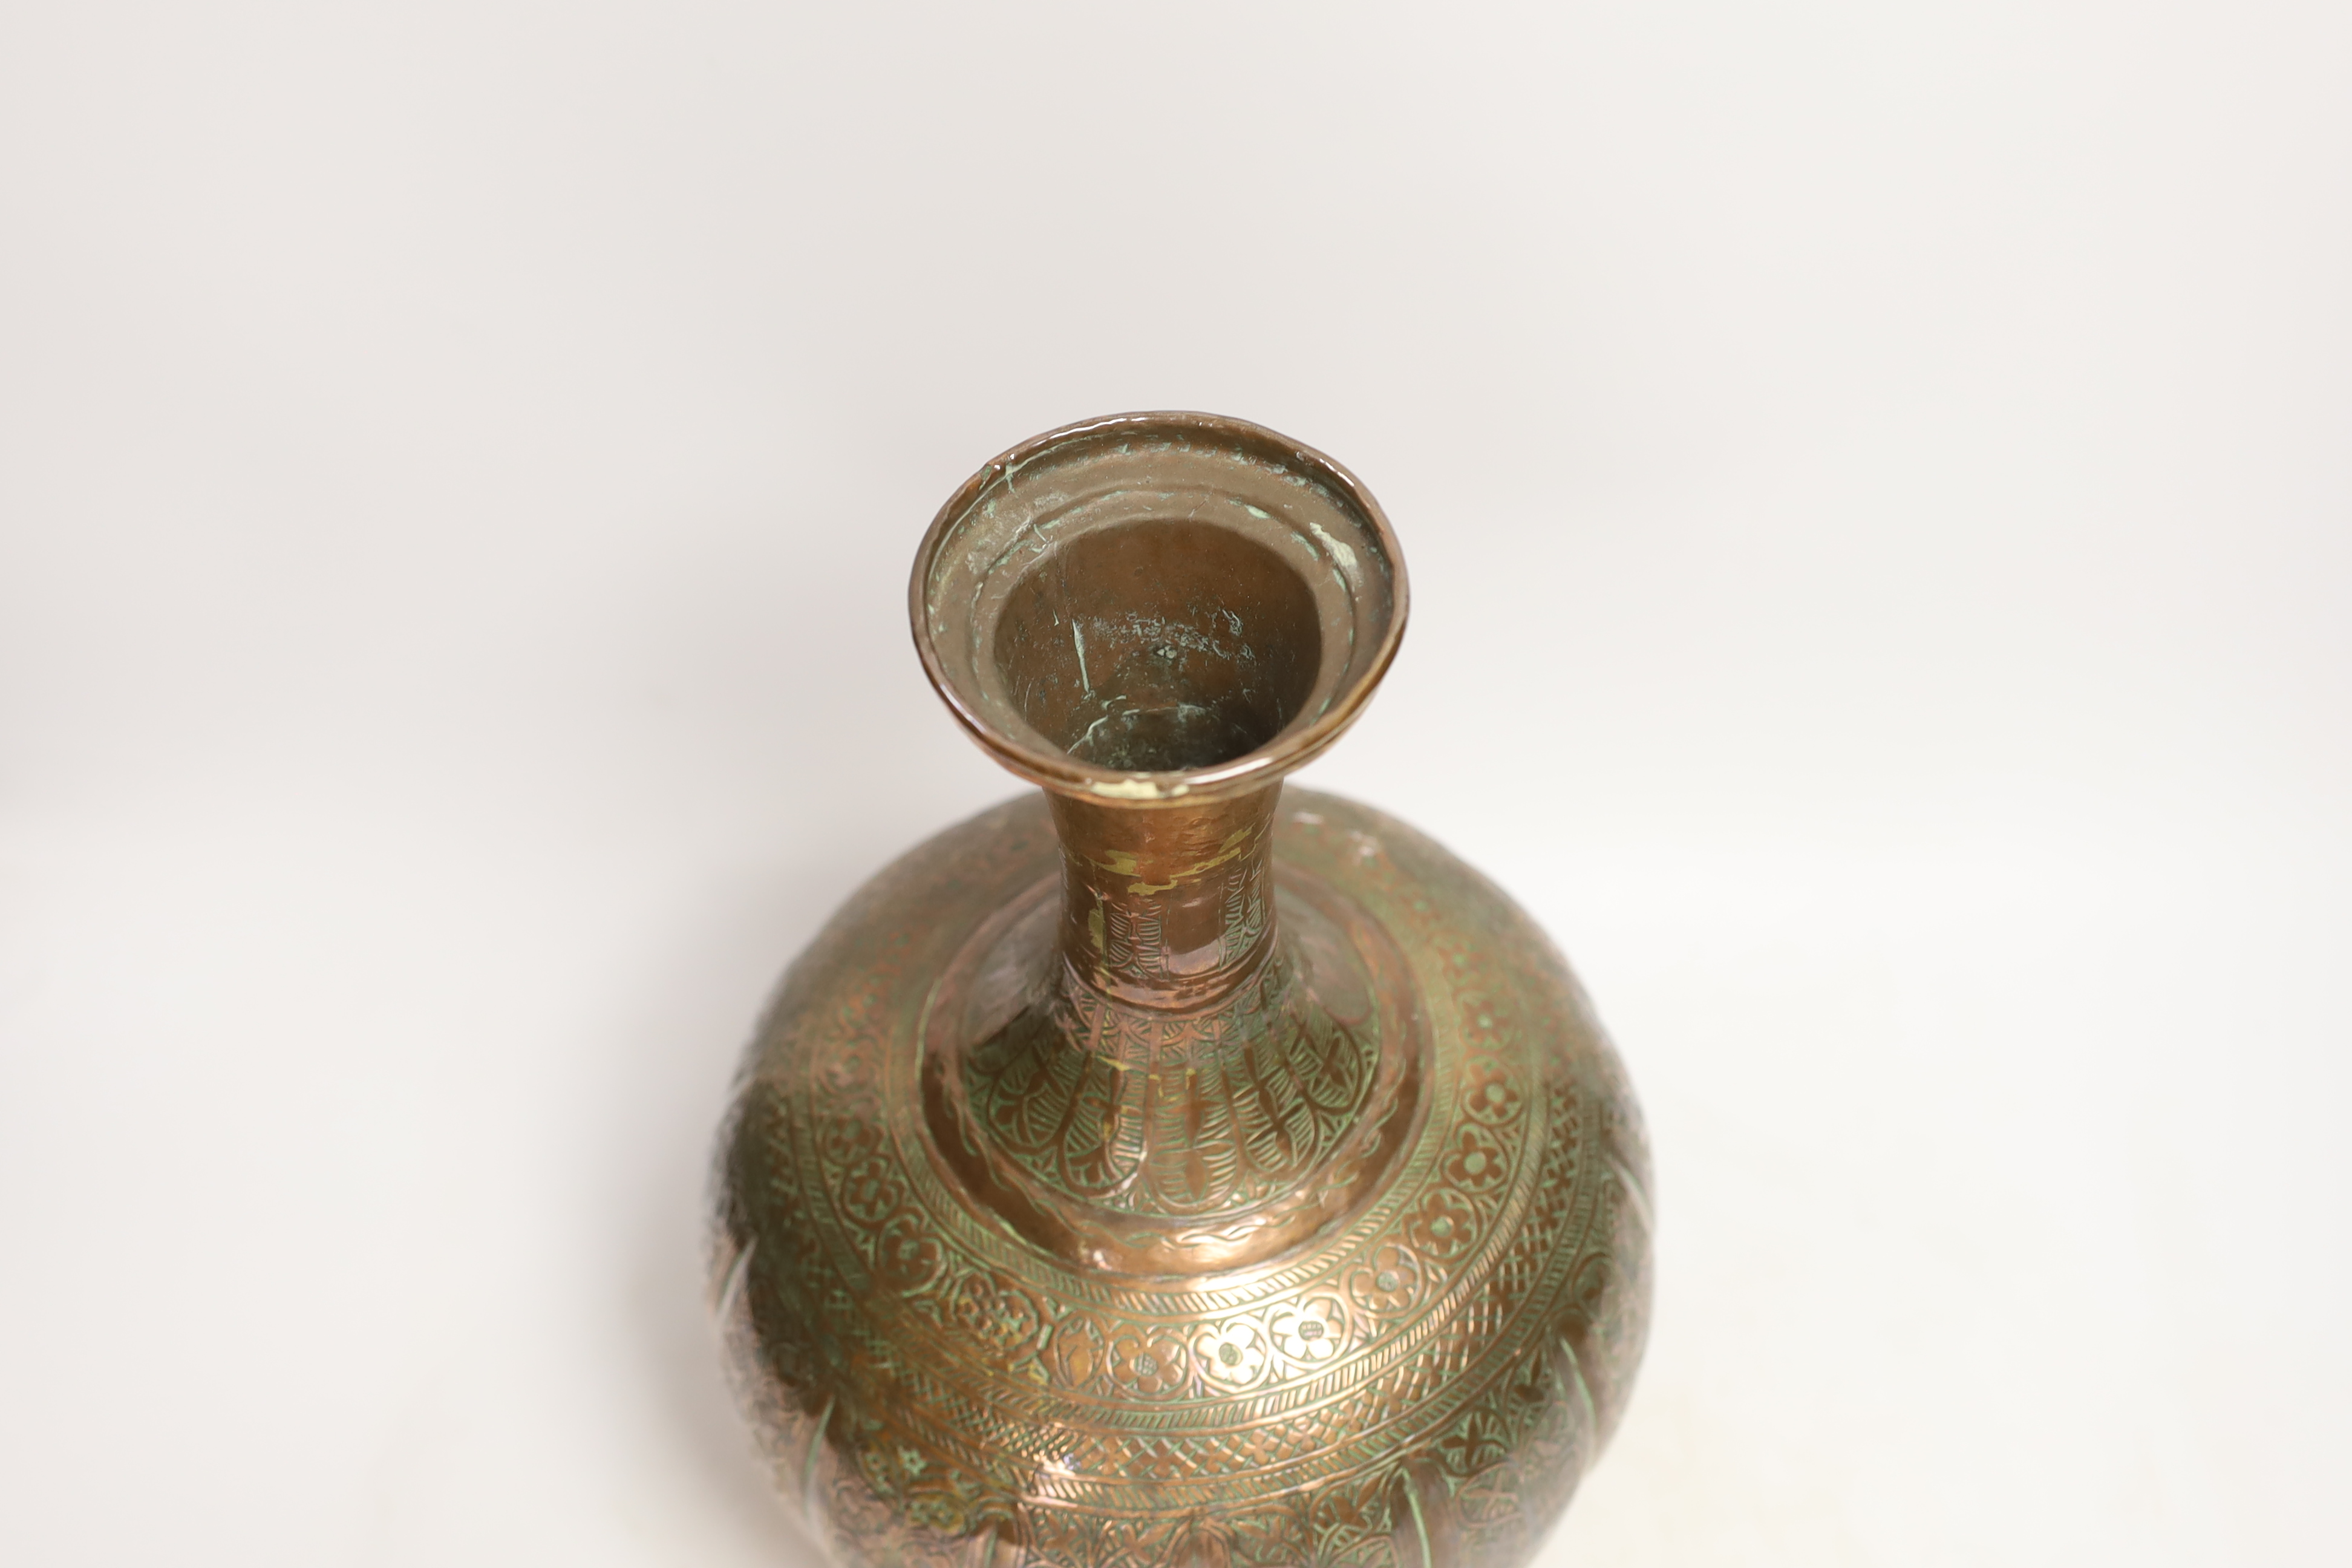 An Islamic engraved copper vase, 31cm